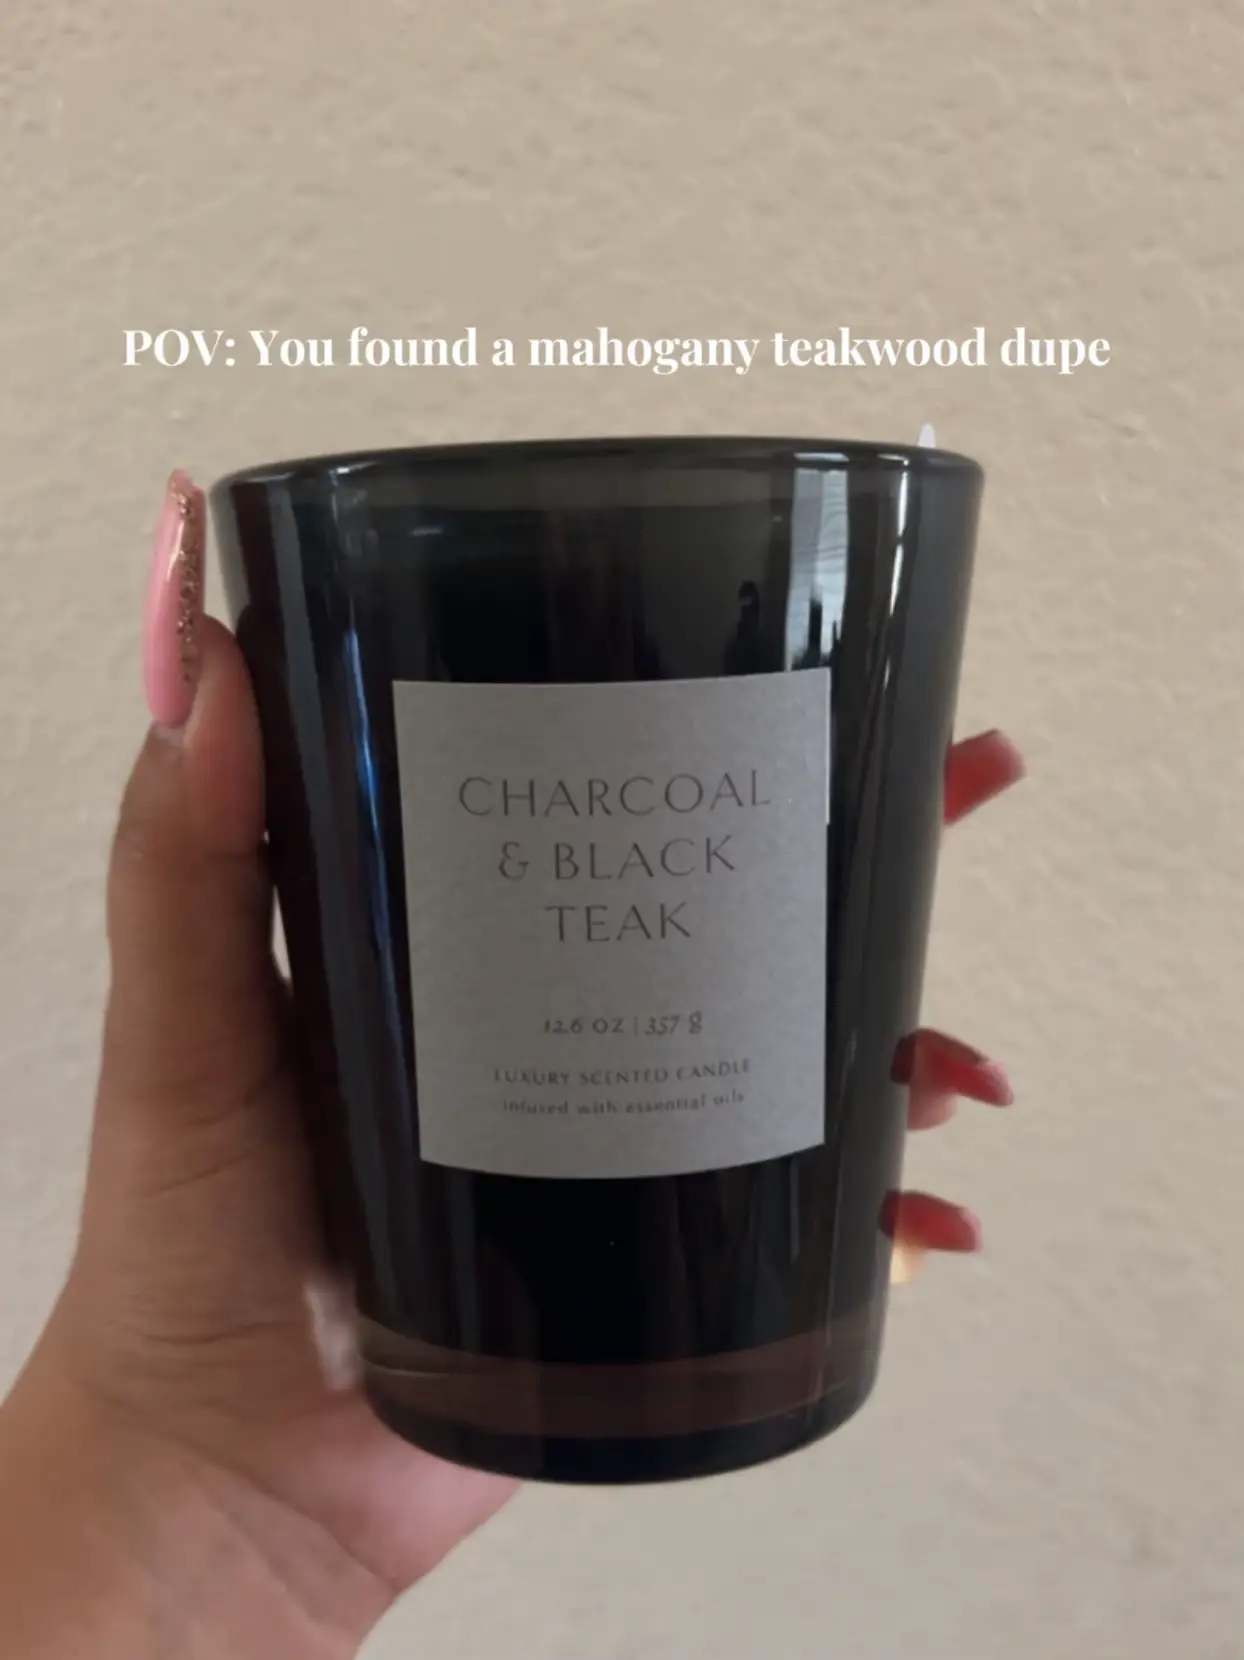 mahogany teakwood is a cologne｜TikTok Search